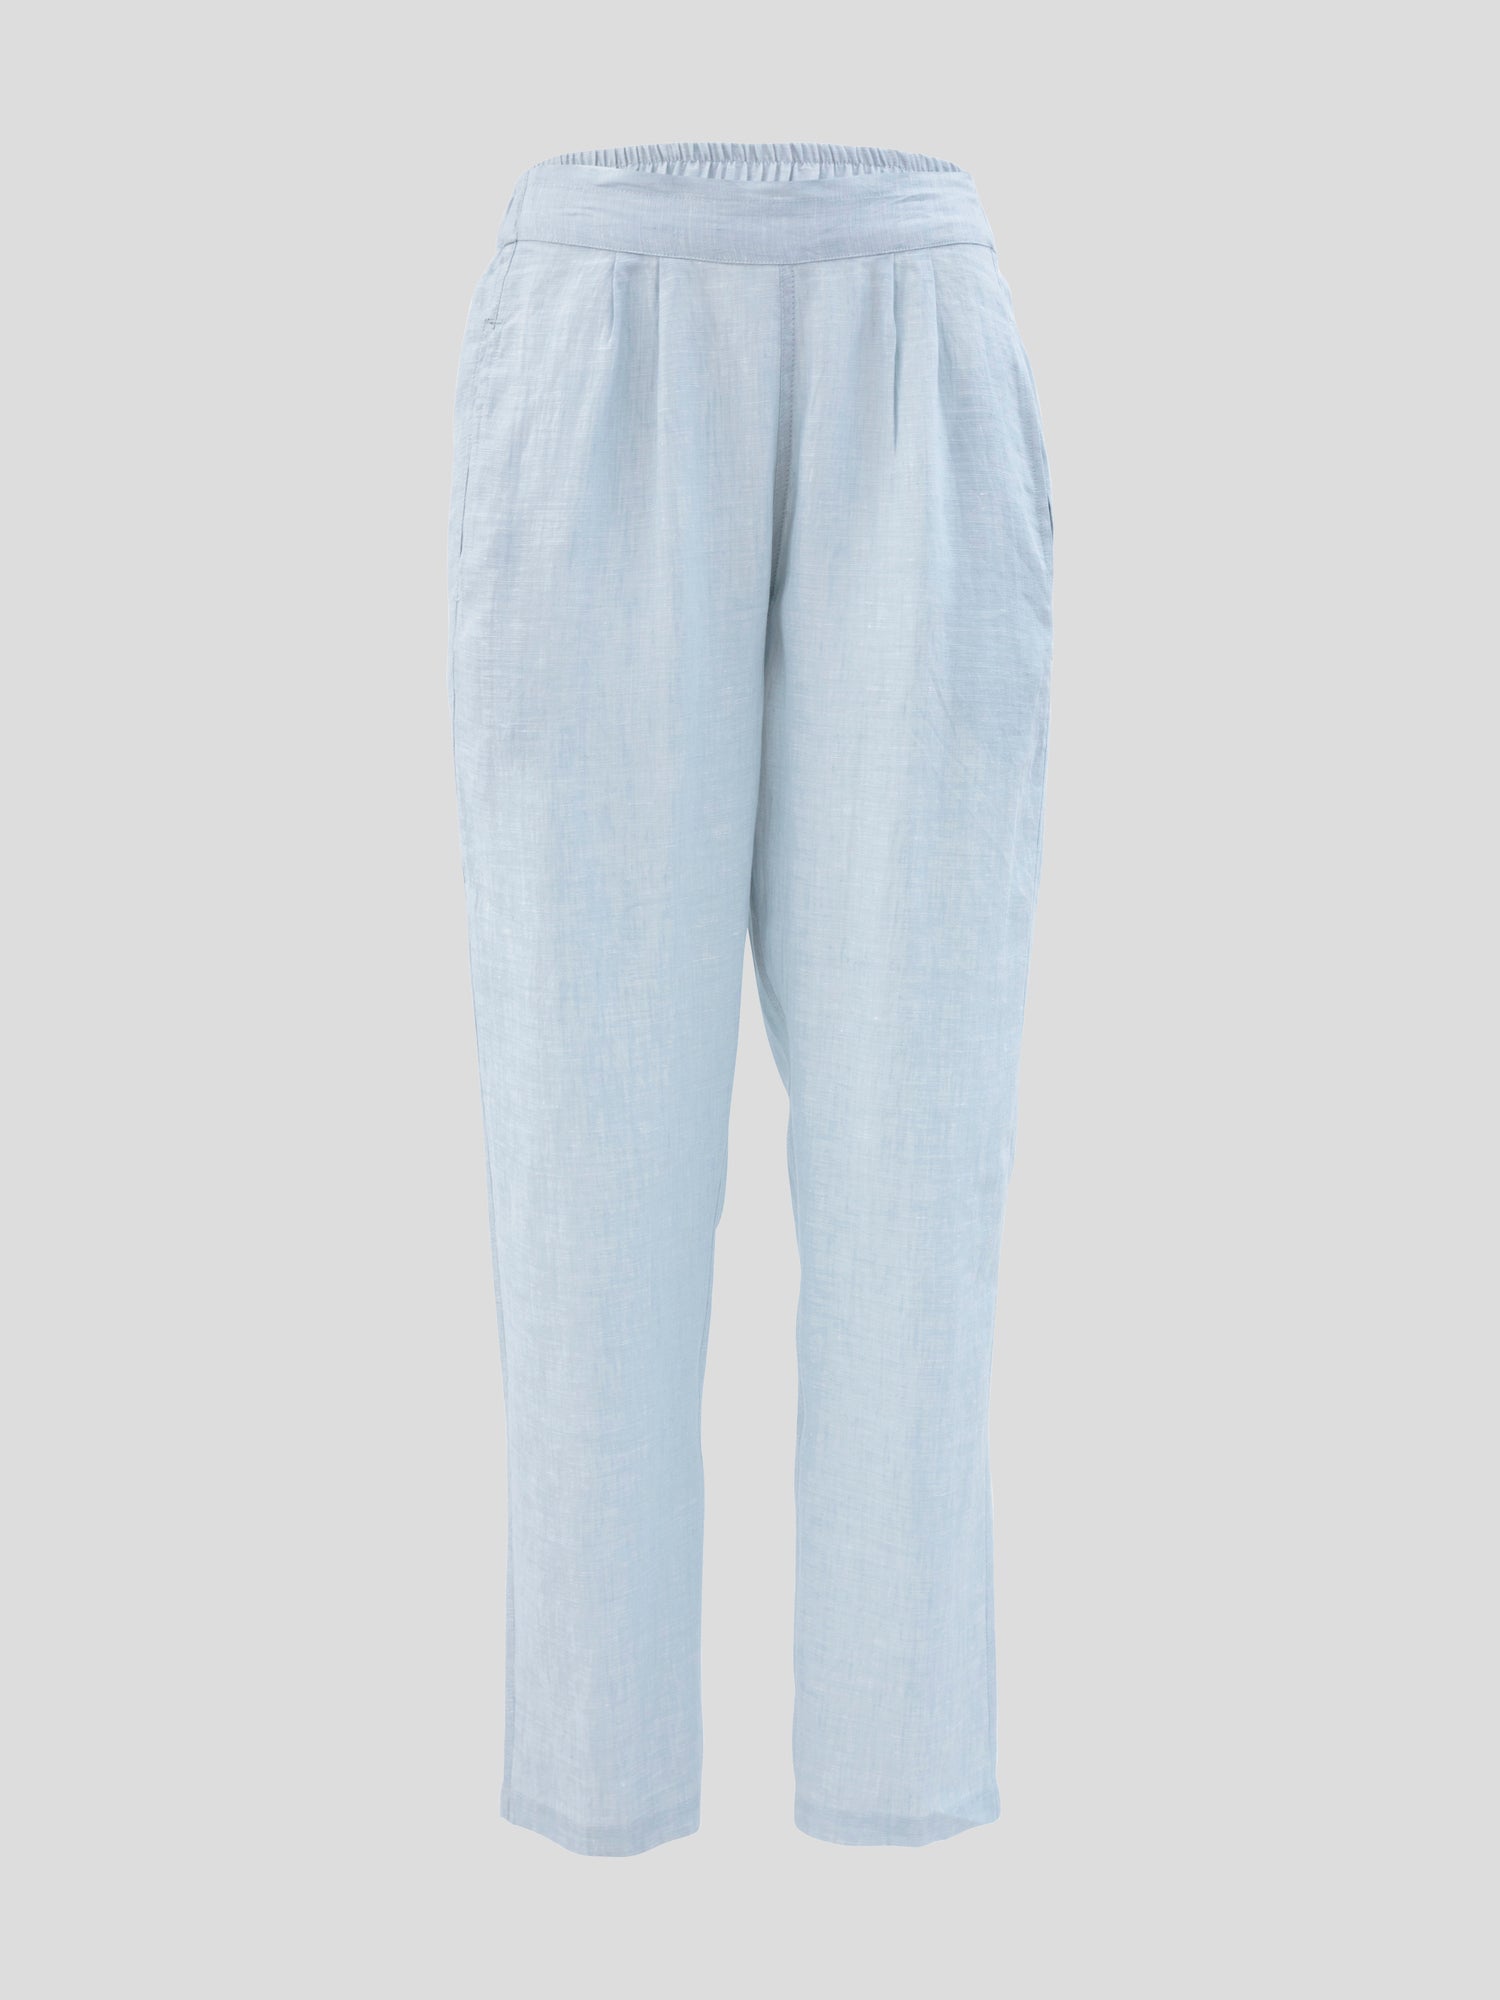 Baby Blue Linen Pant - Ladies Linen Pants online shopping in Sri Lanka –  BPosh